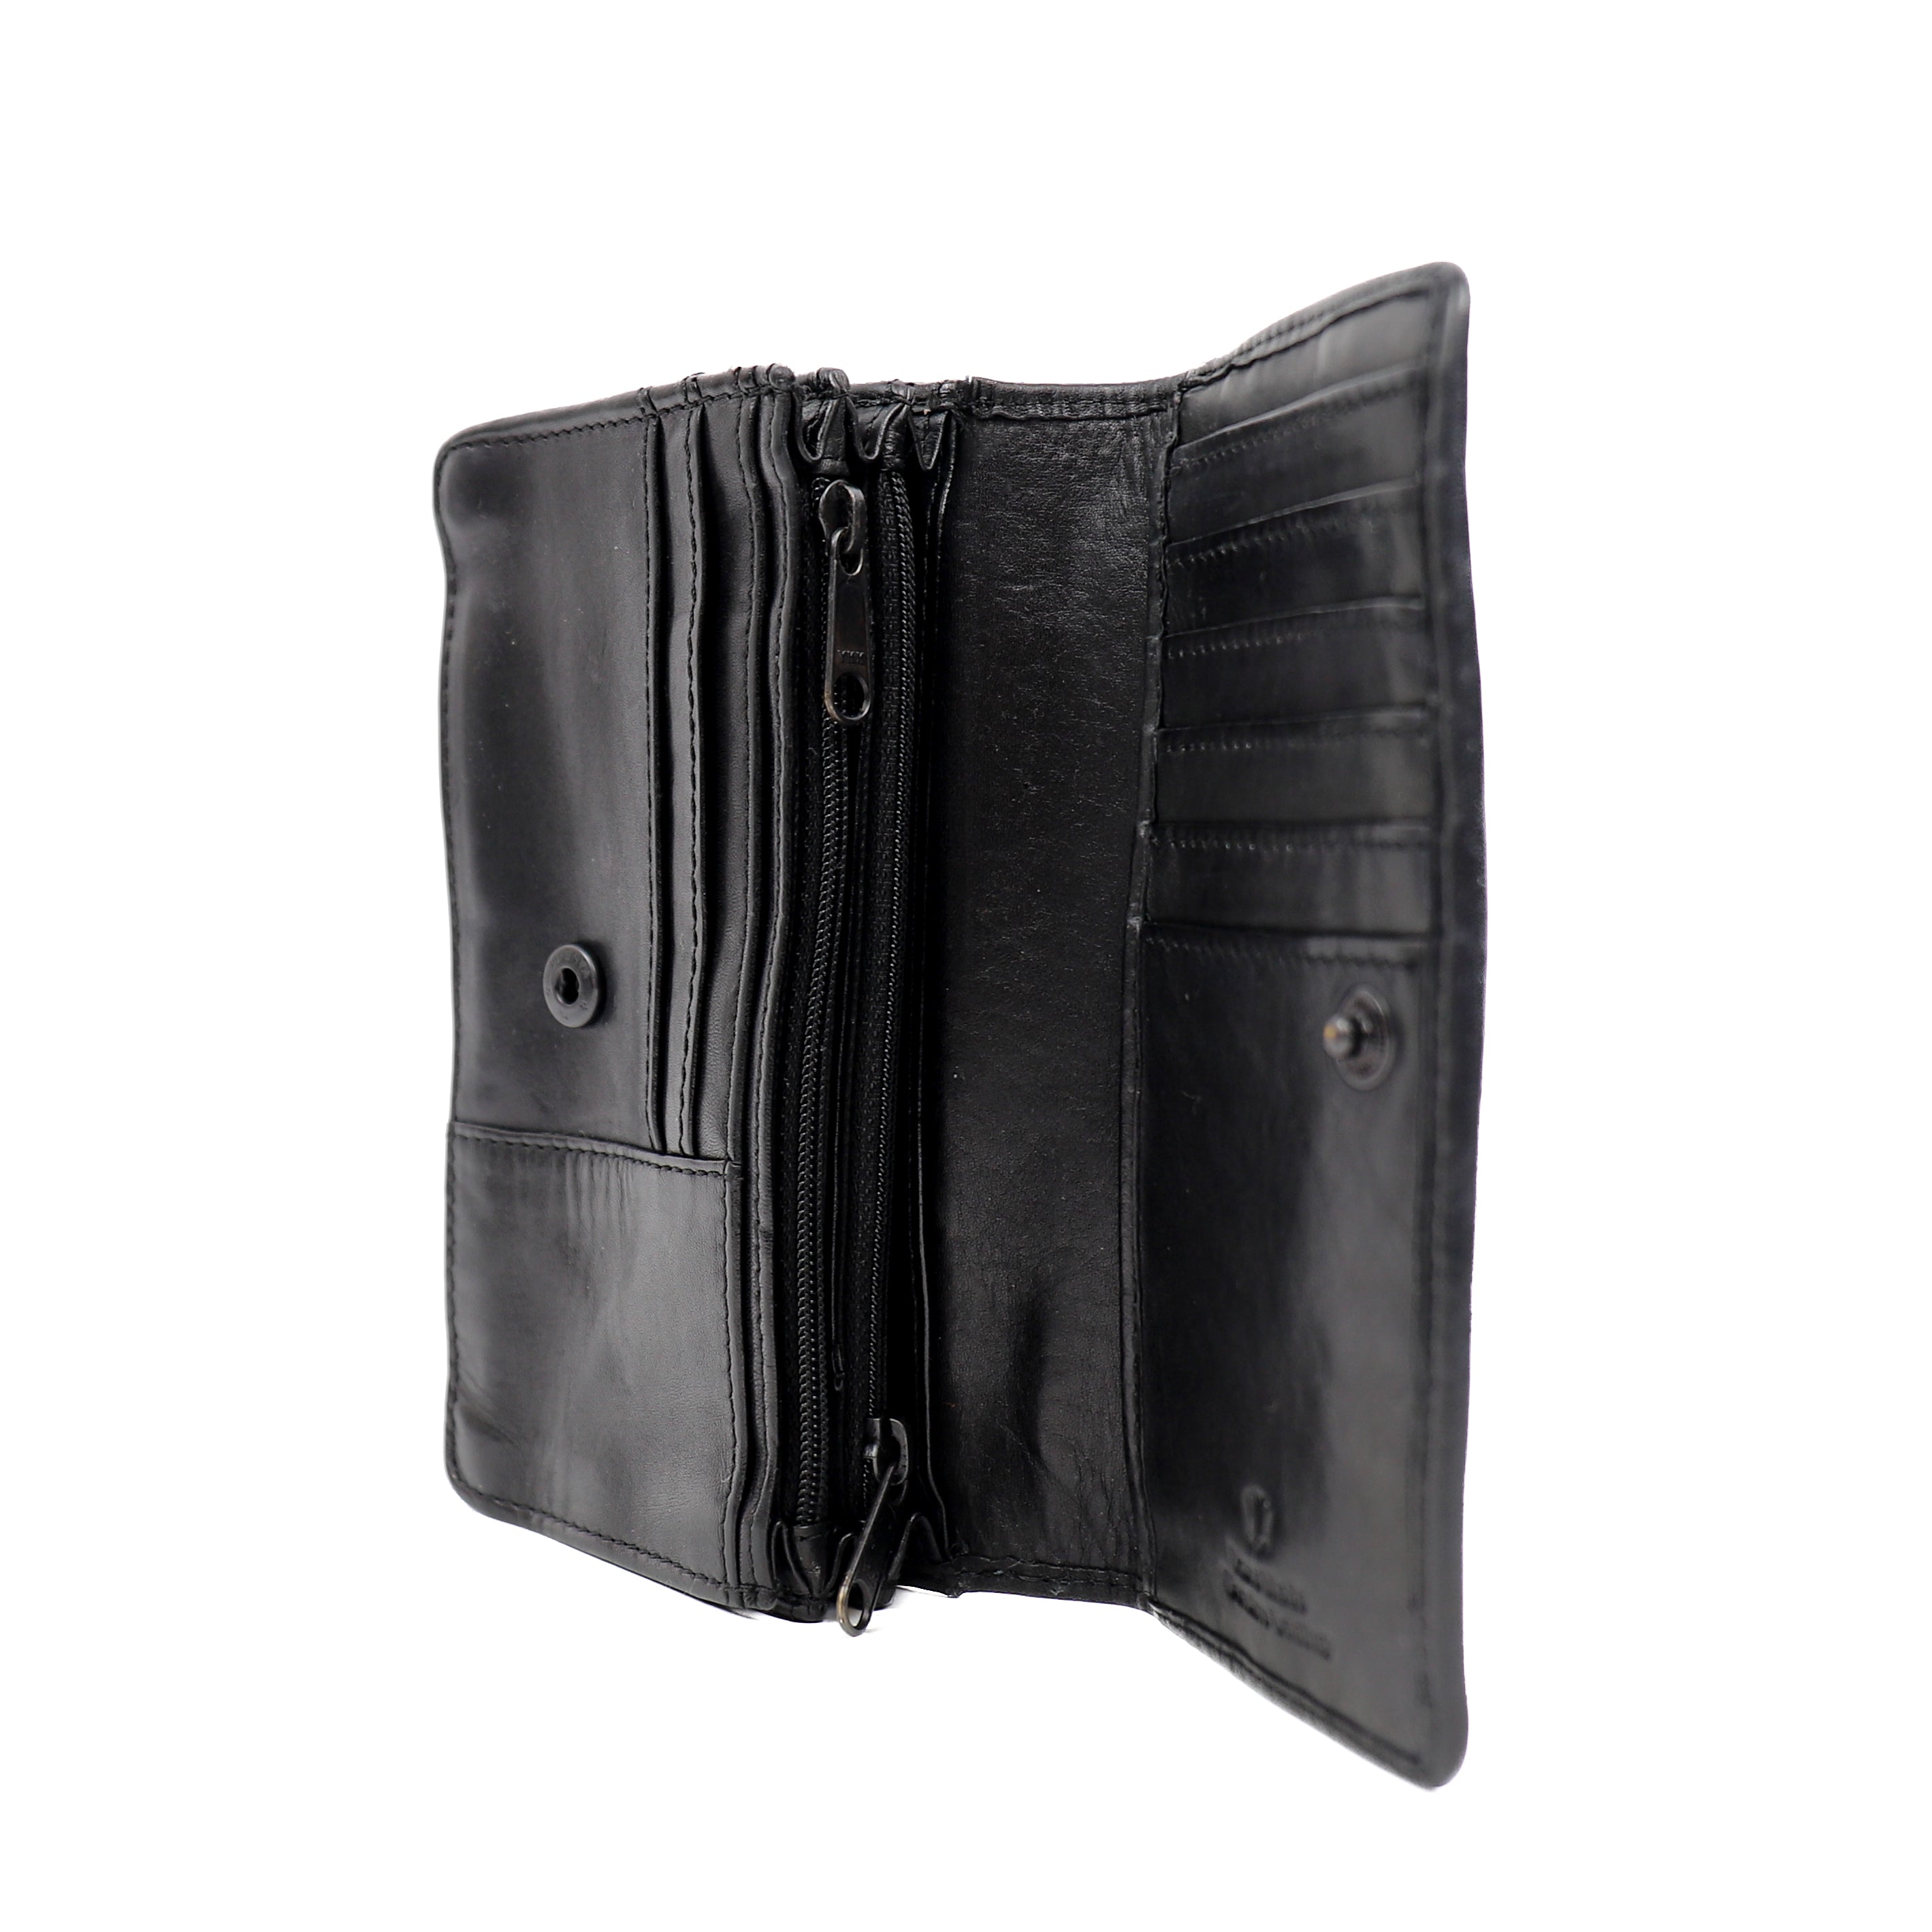 Wrap wallet 'Emma' black - CL 782 RFID